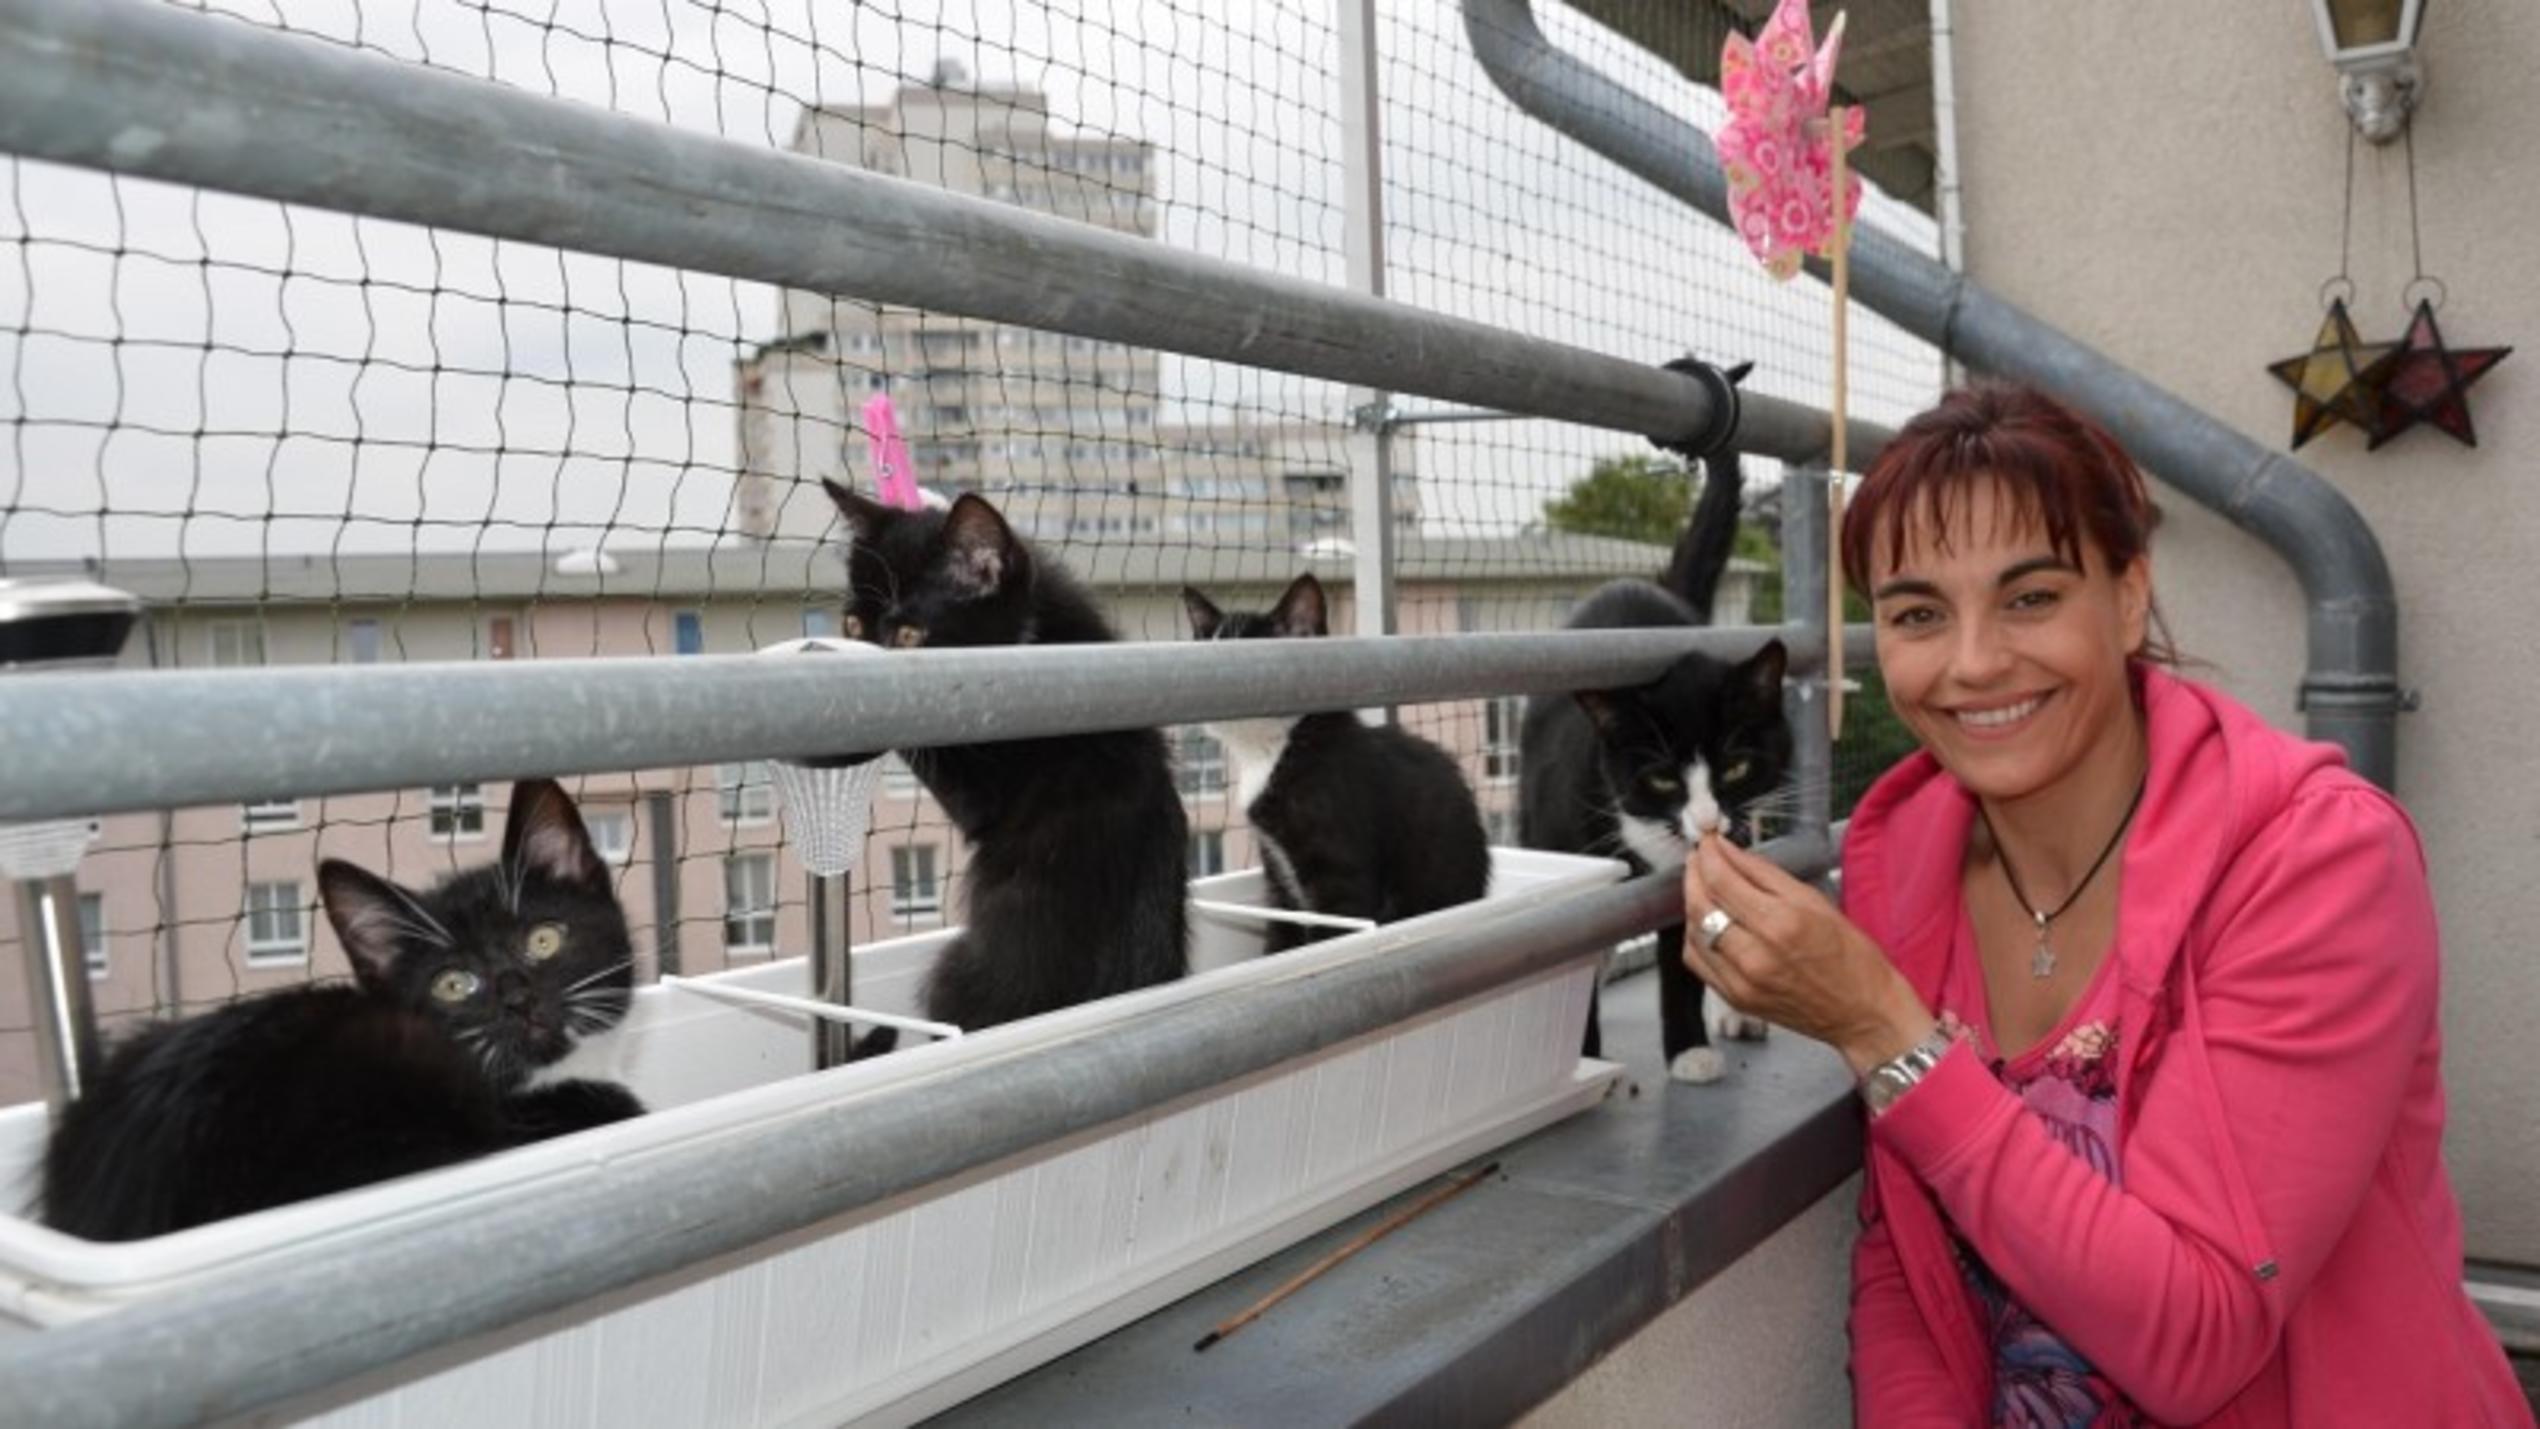 hundkatzemaus Diana Eichhorn macht den Balkon katzensicher